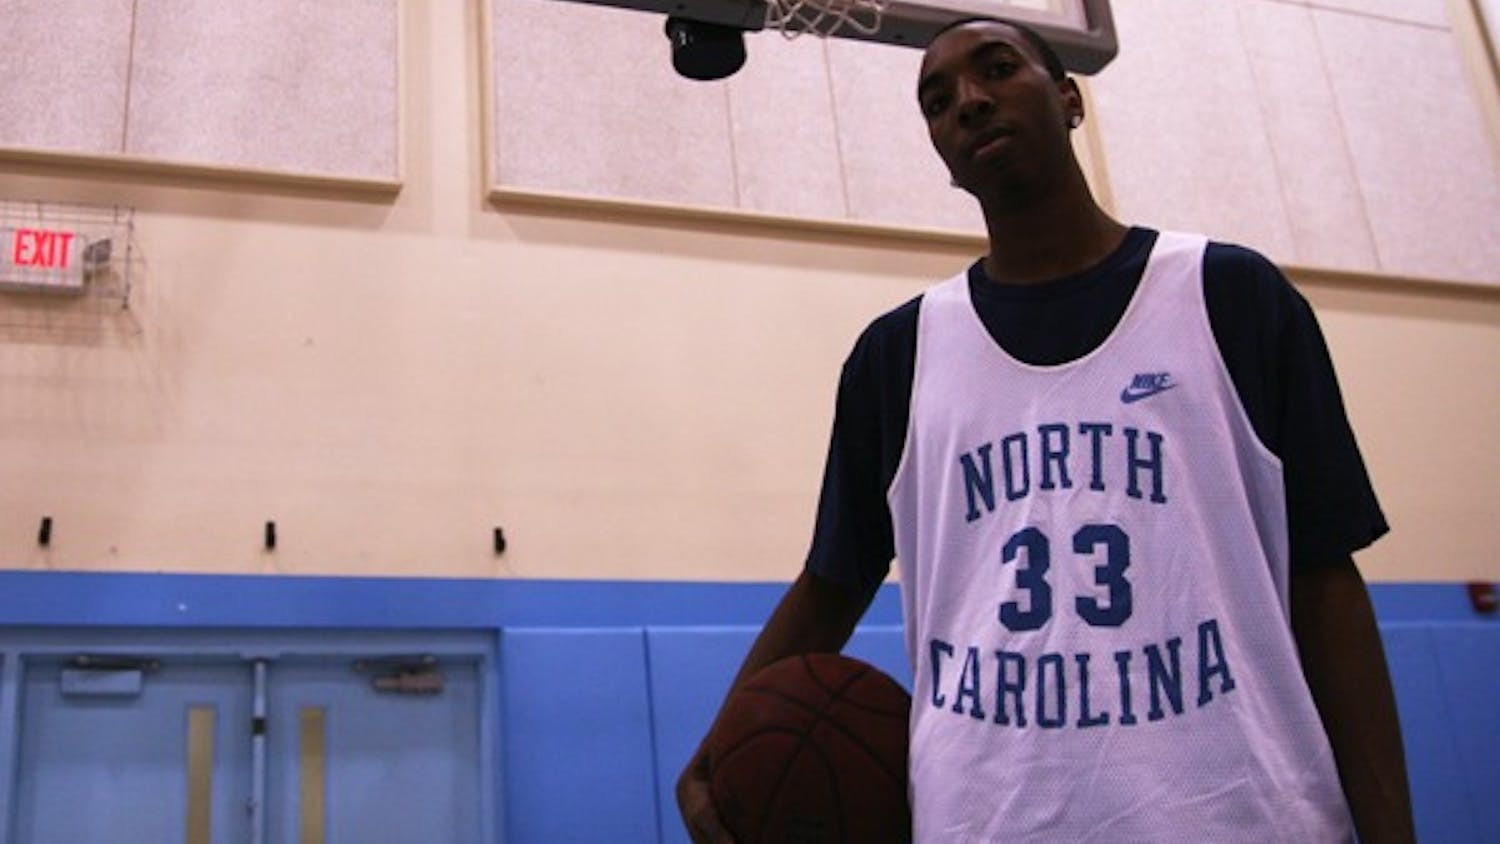 Freshman Shaun Scott plays on the UNC junior varsity basketball team. DTH/Katherine Vance